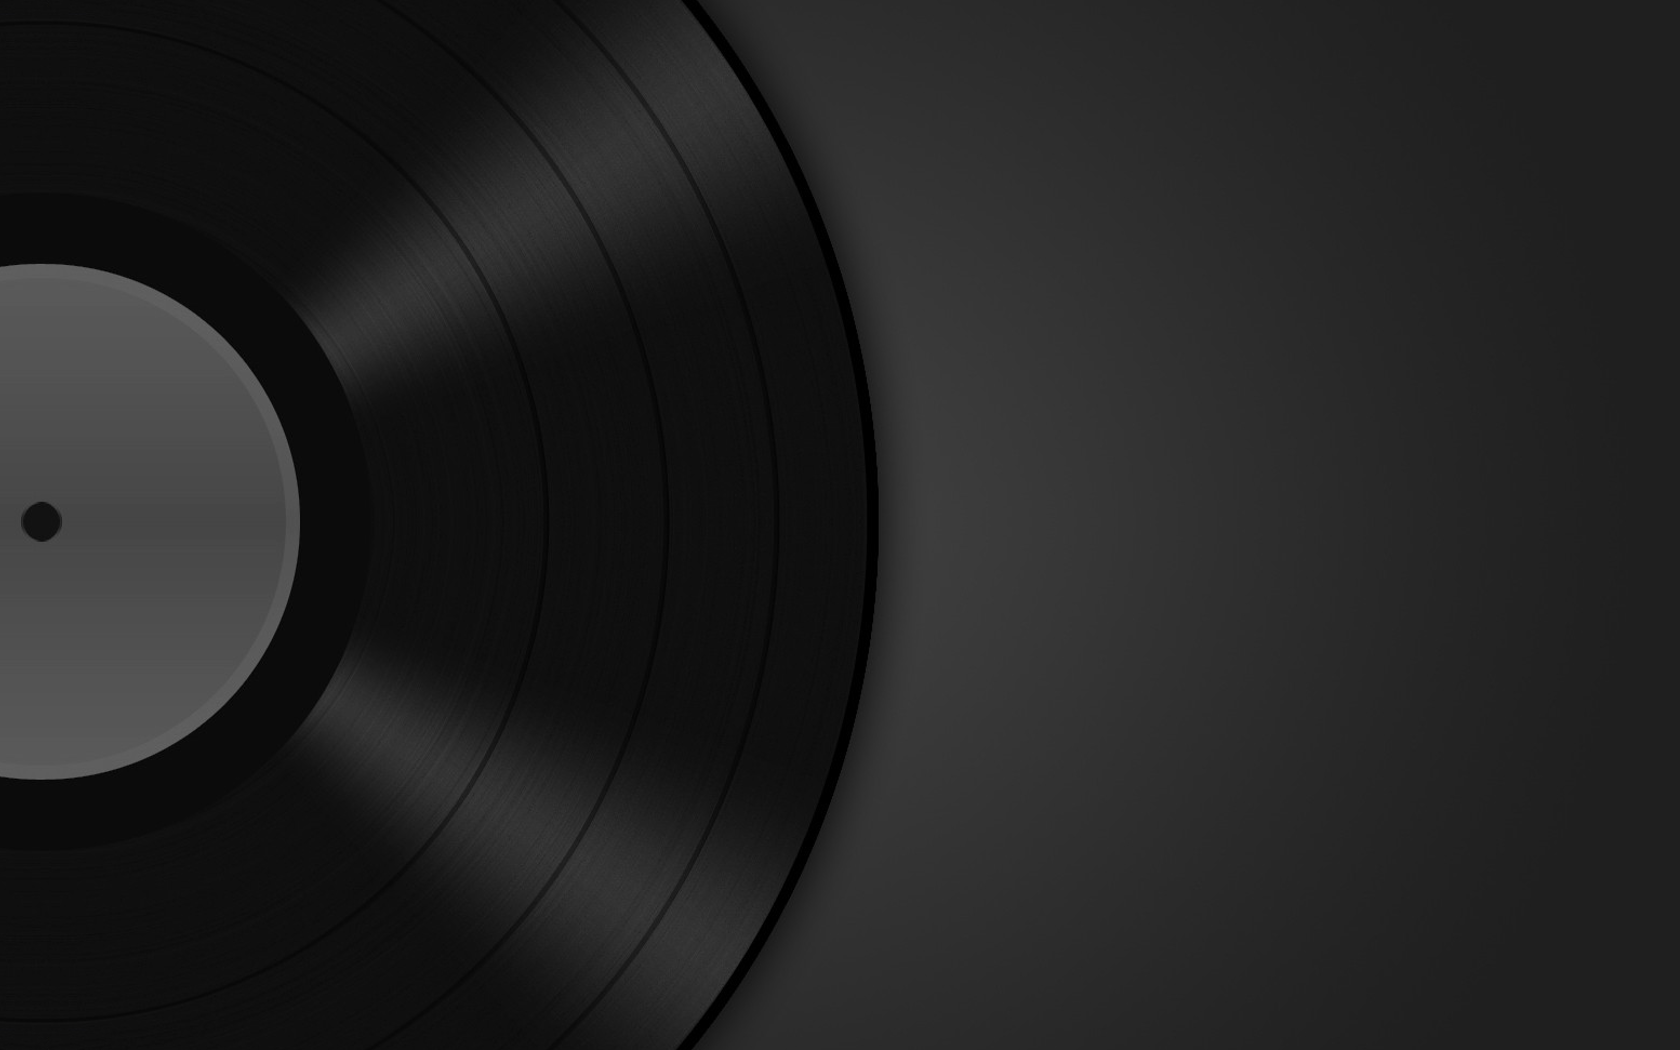 music wallpaper tumblr,black,gramophone record,black and white,monochrome,circle